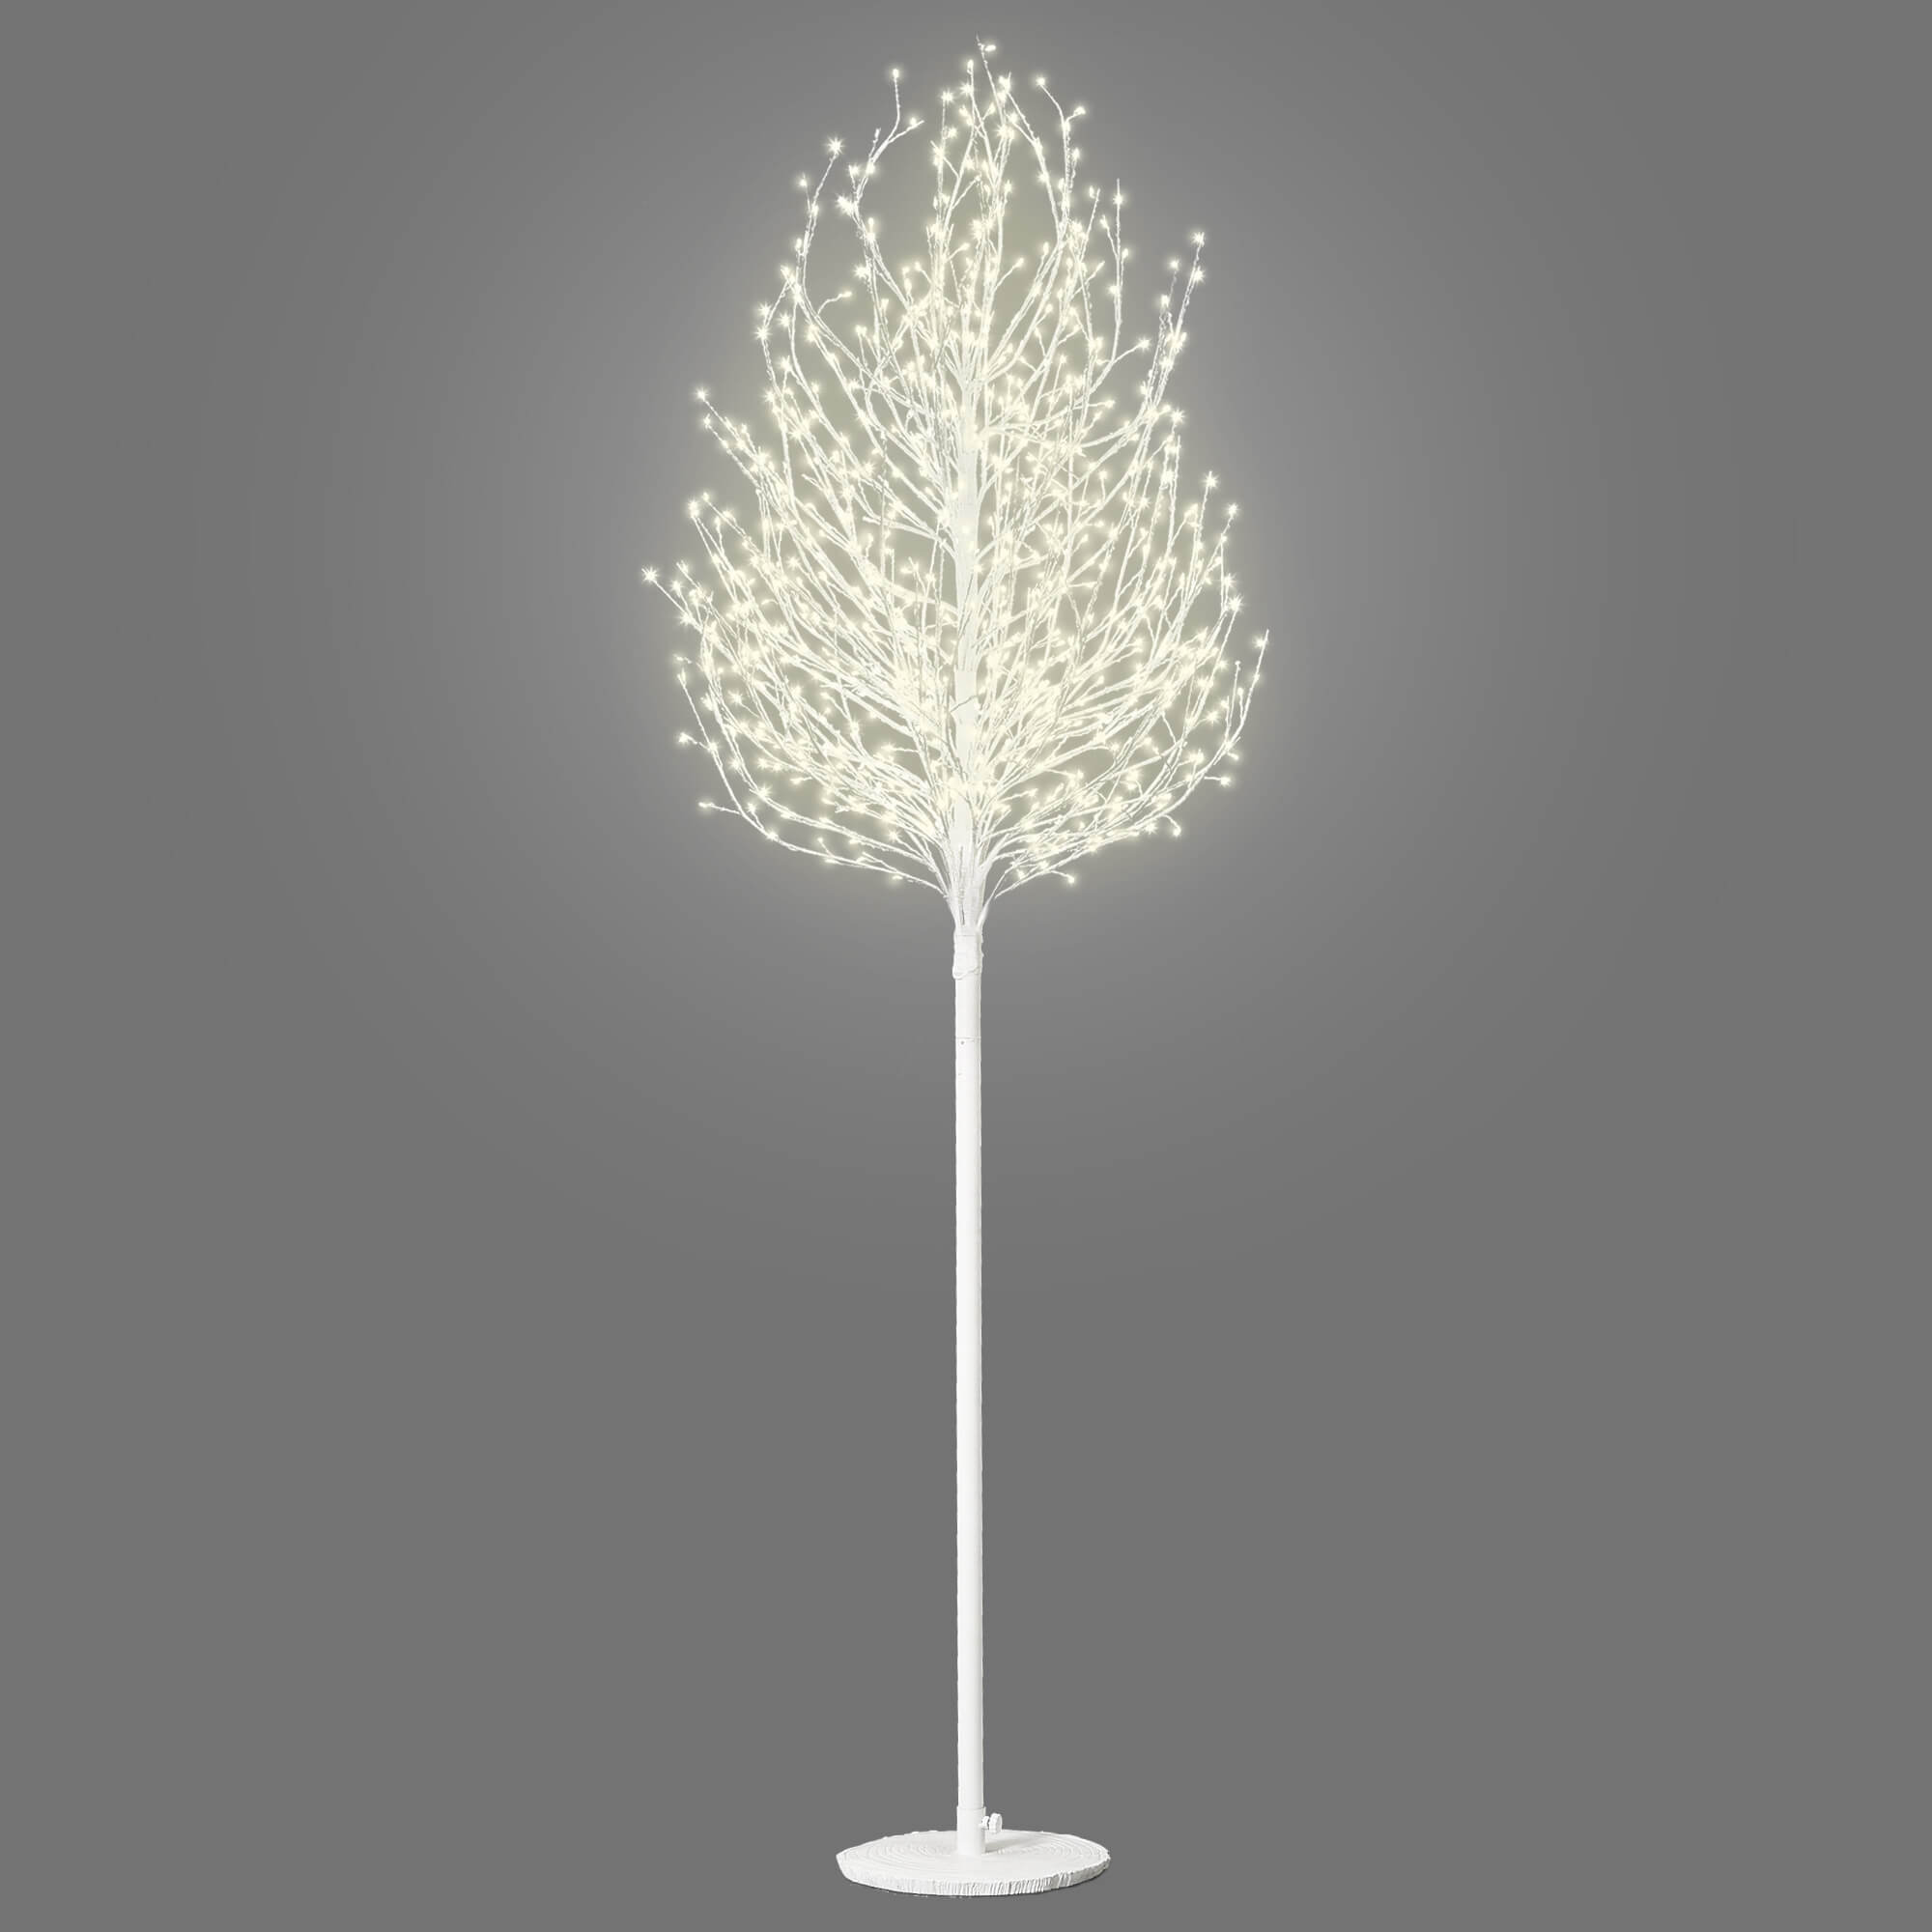 Micro Dot Warm White LED Tree with Timer -White